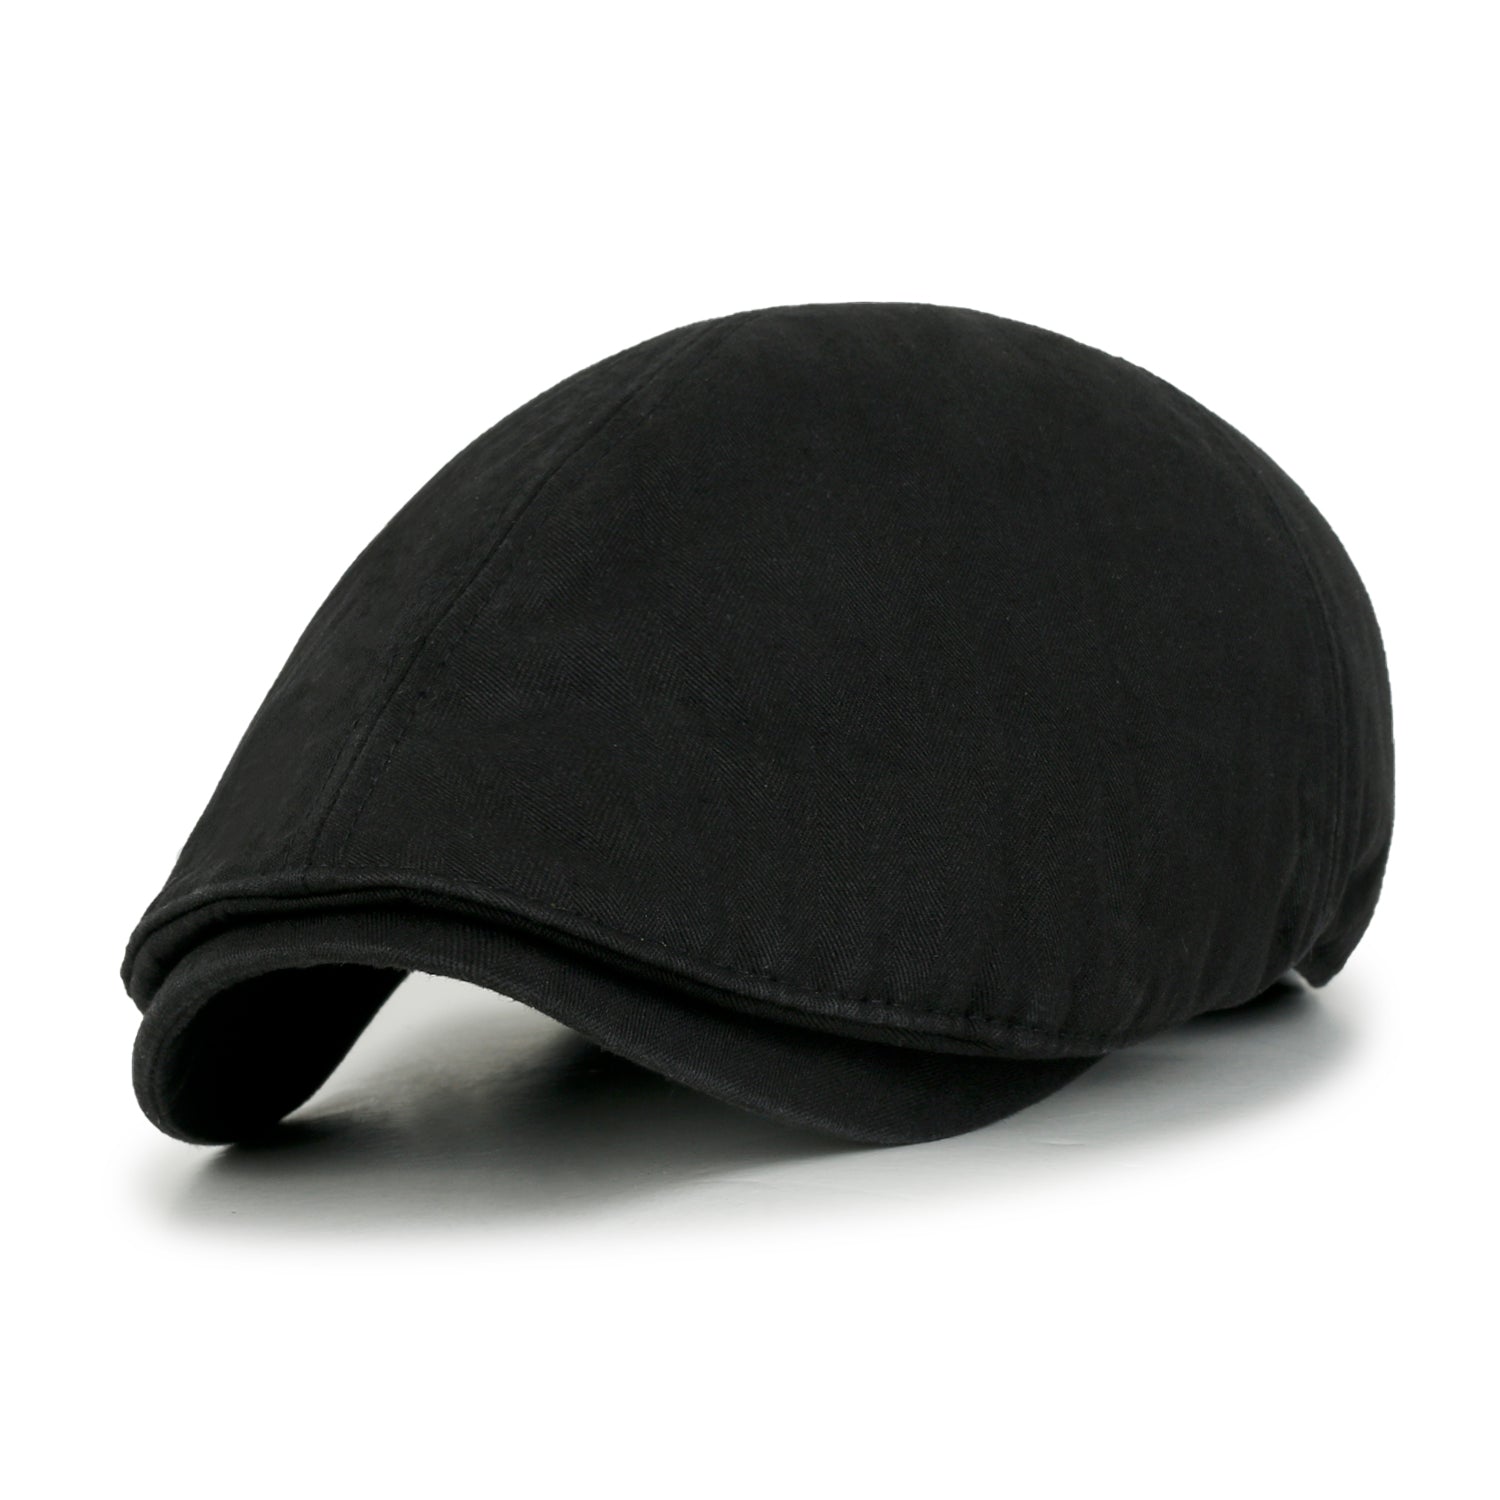 WETOO Men's Flat Cap Gatsby Newsboy Lvy Irish Hats Driving Cabbie Hunting  Cap Aa3-cotton-black